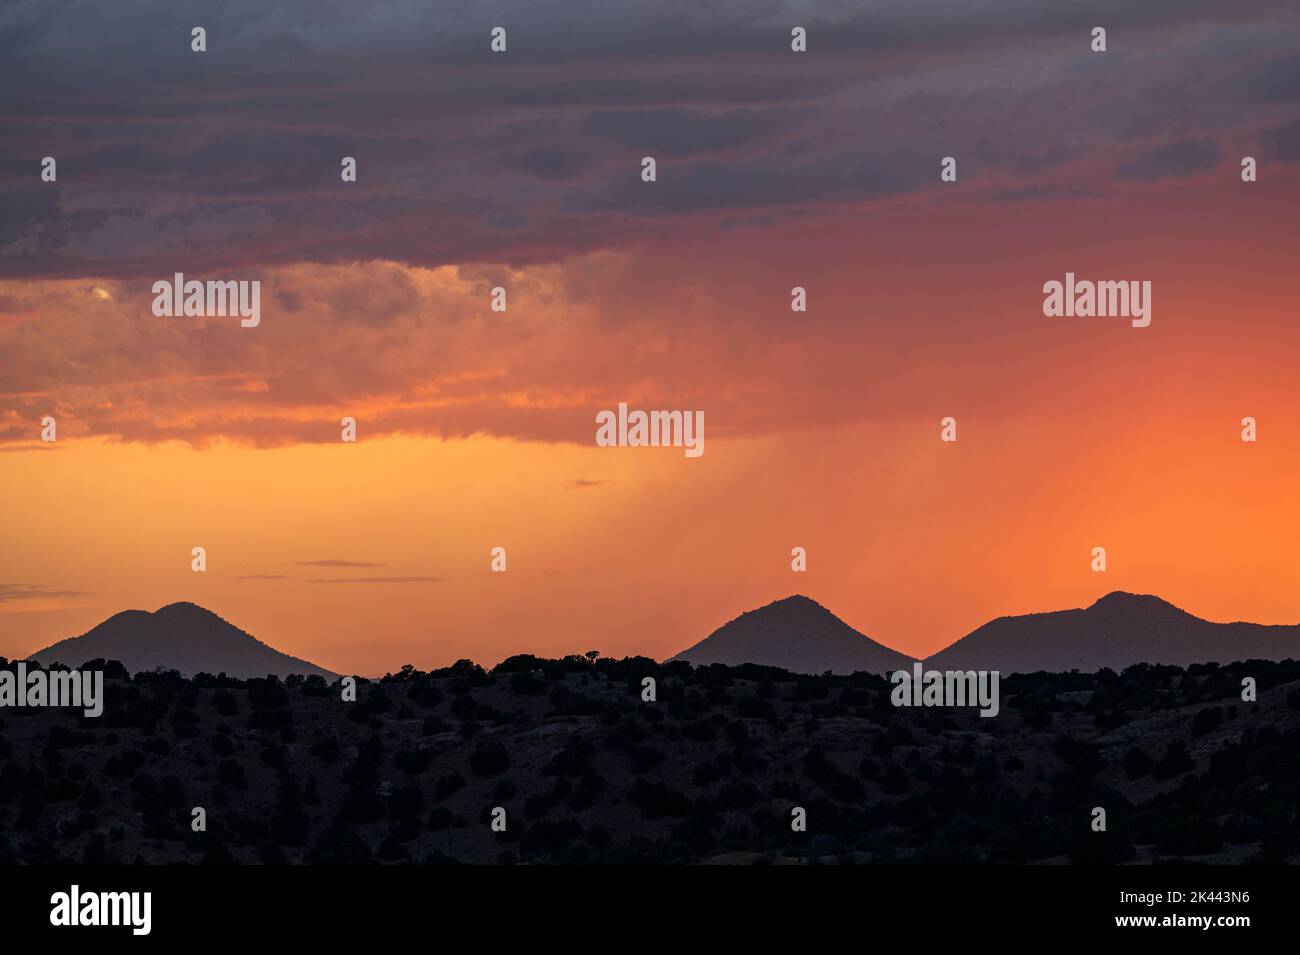 Usa, New Mexico, Lamy, Dramatic sunset sky over desert landscape Stock Photo